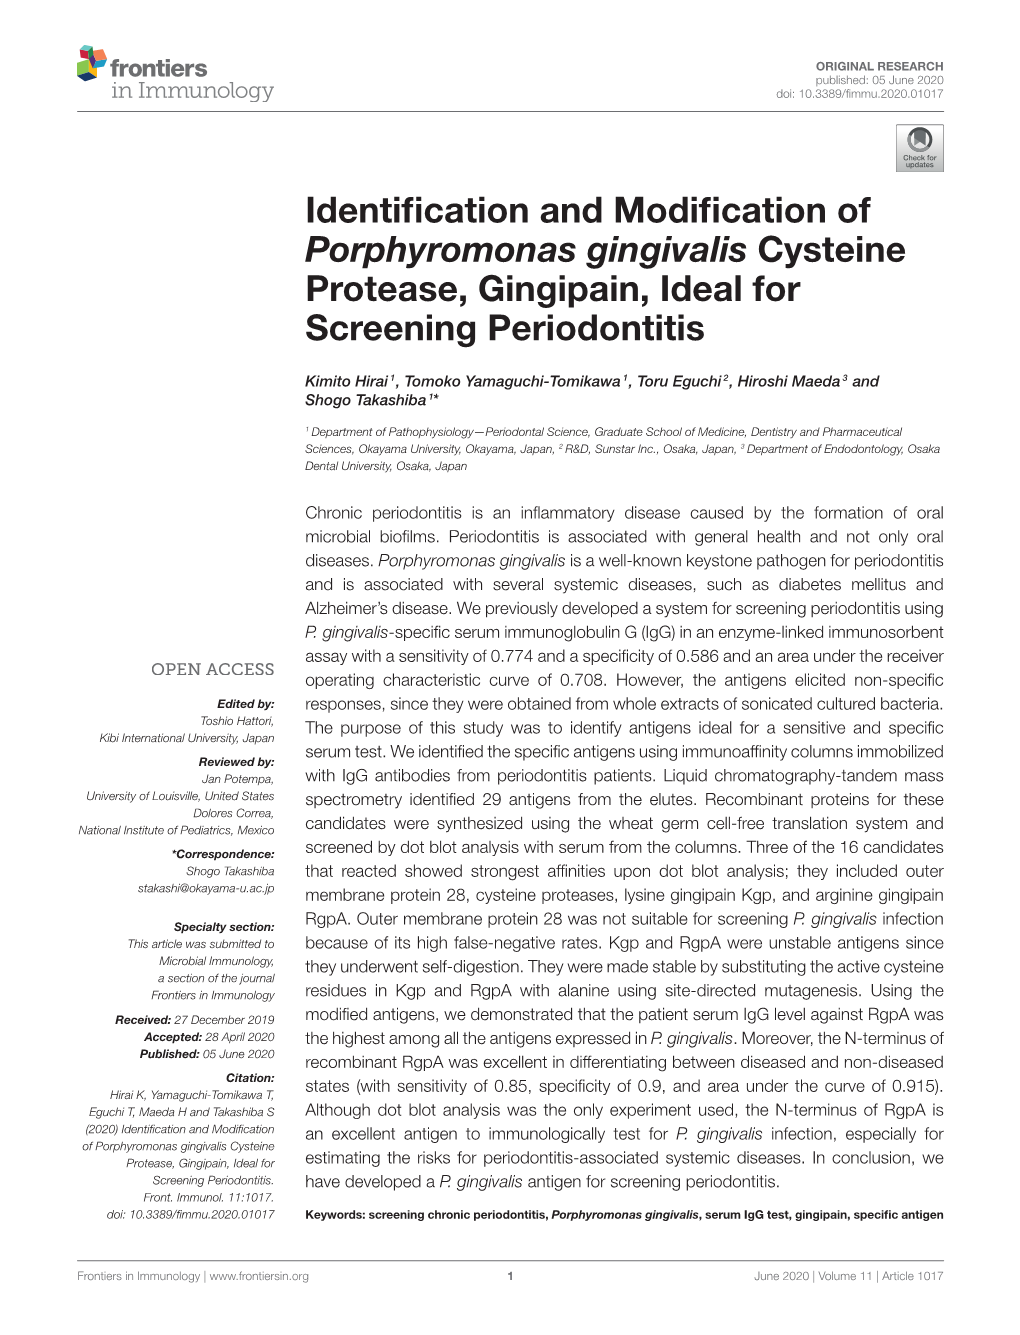 Identification and Modification of Porphyromonas Gingivalis Cysteine